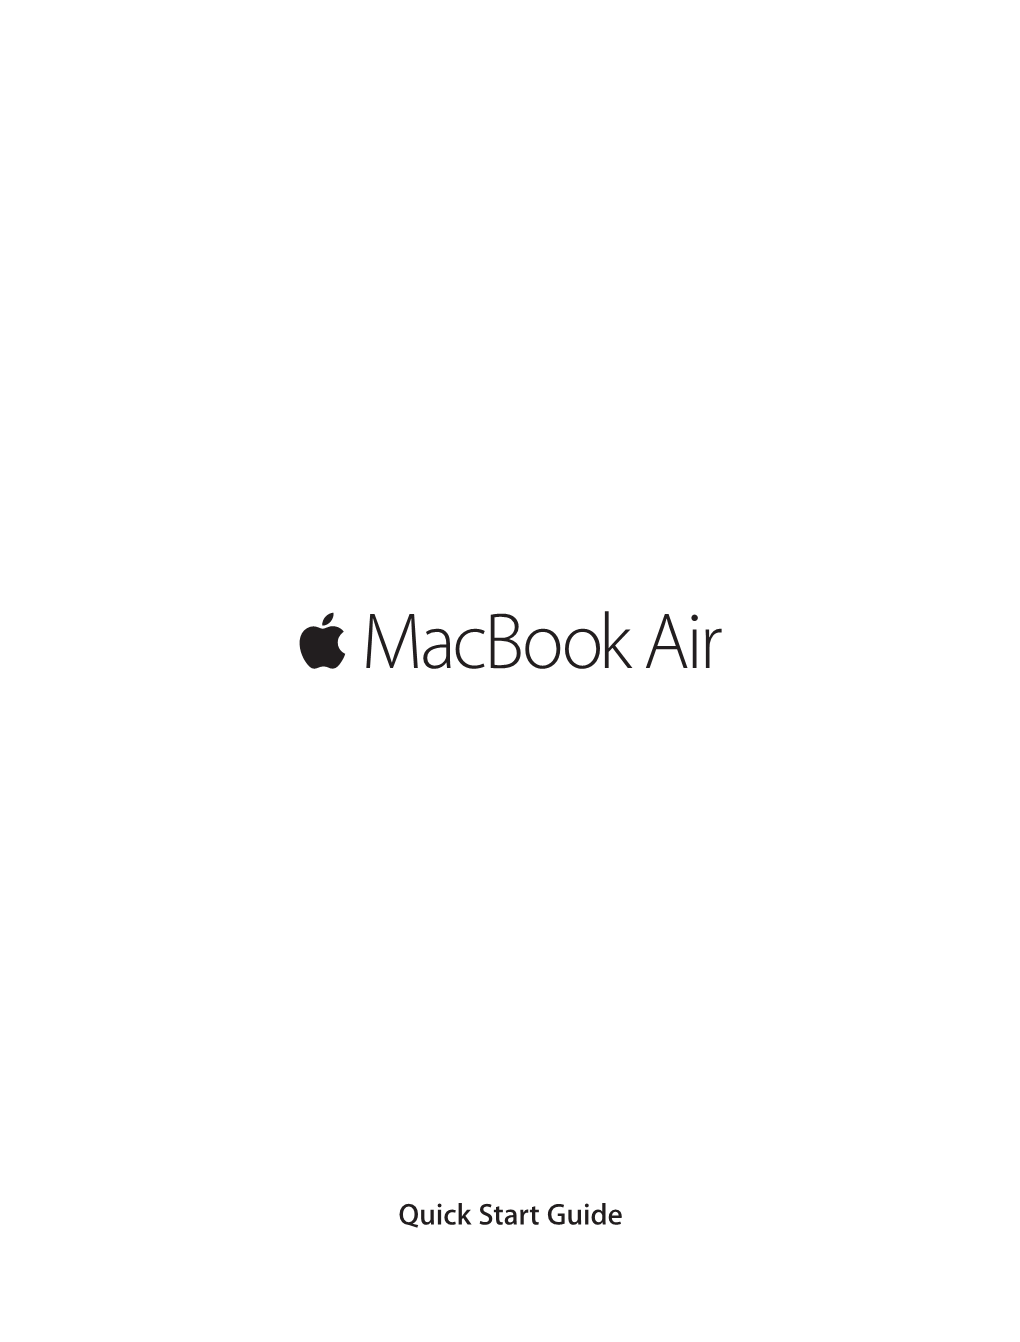 Macbook Air Quick Start Guide